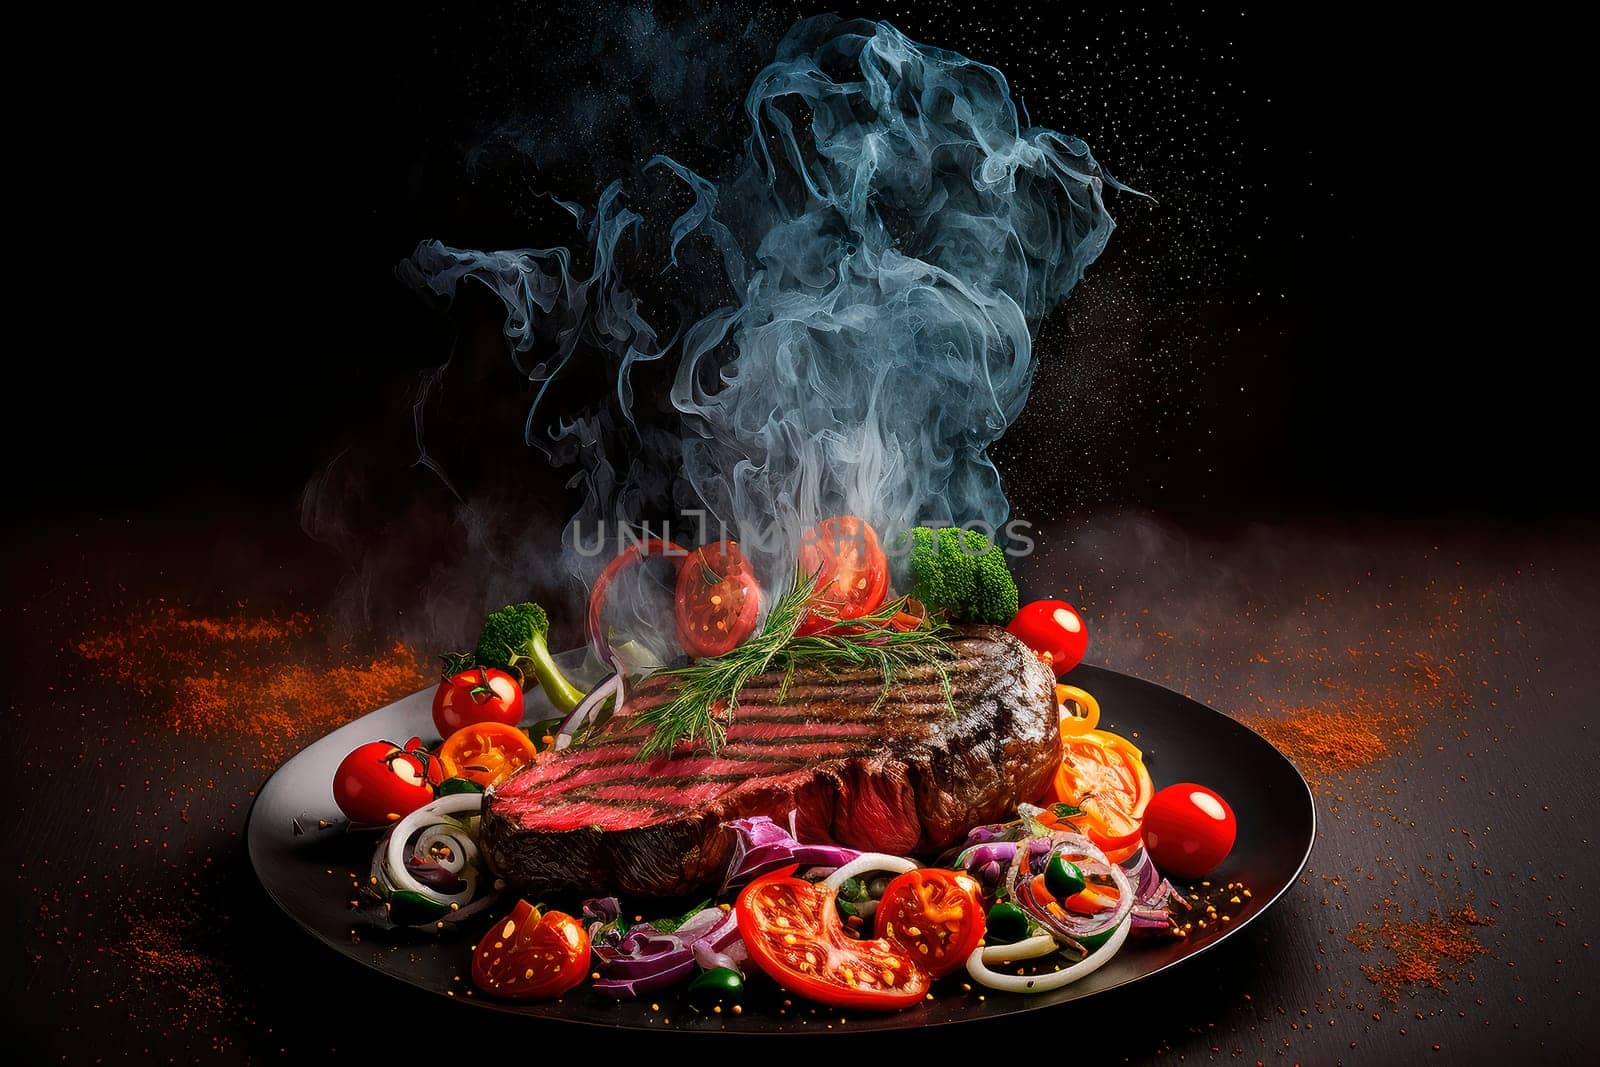 beef steak, product studio photo, dark black background, fresh tomato salad with onion, by yanadjana